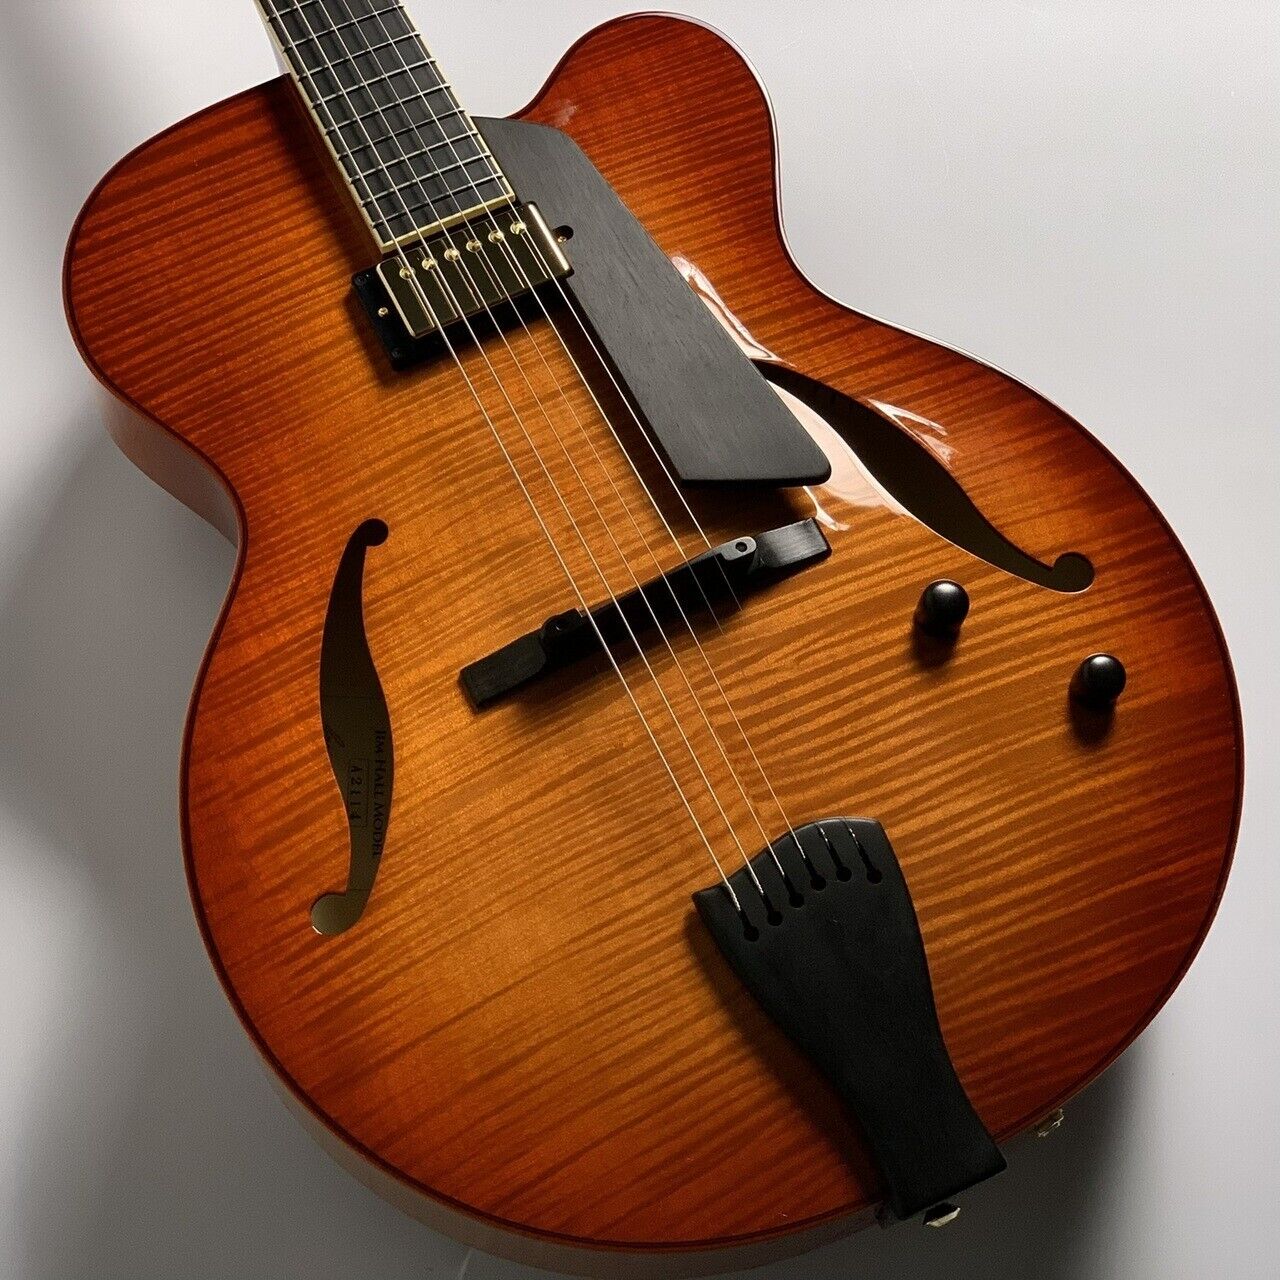 Sadowsky Jim Hall Model Violin Burst full acoustic guitar with hard case